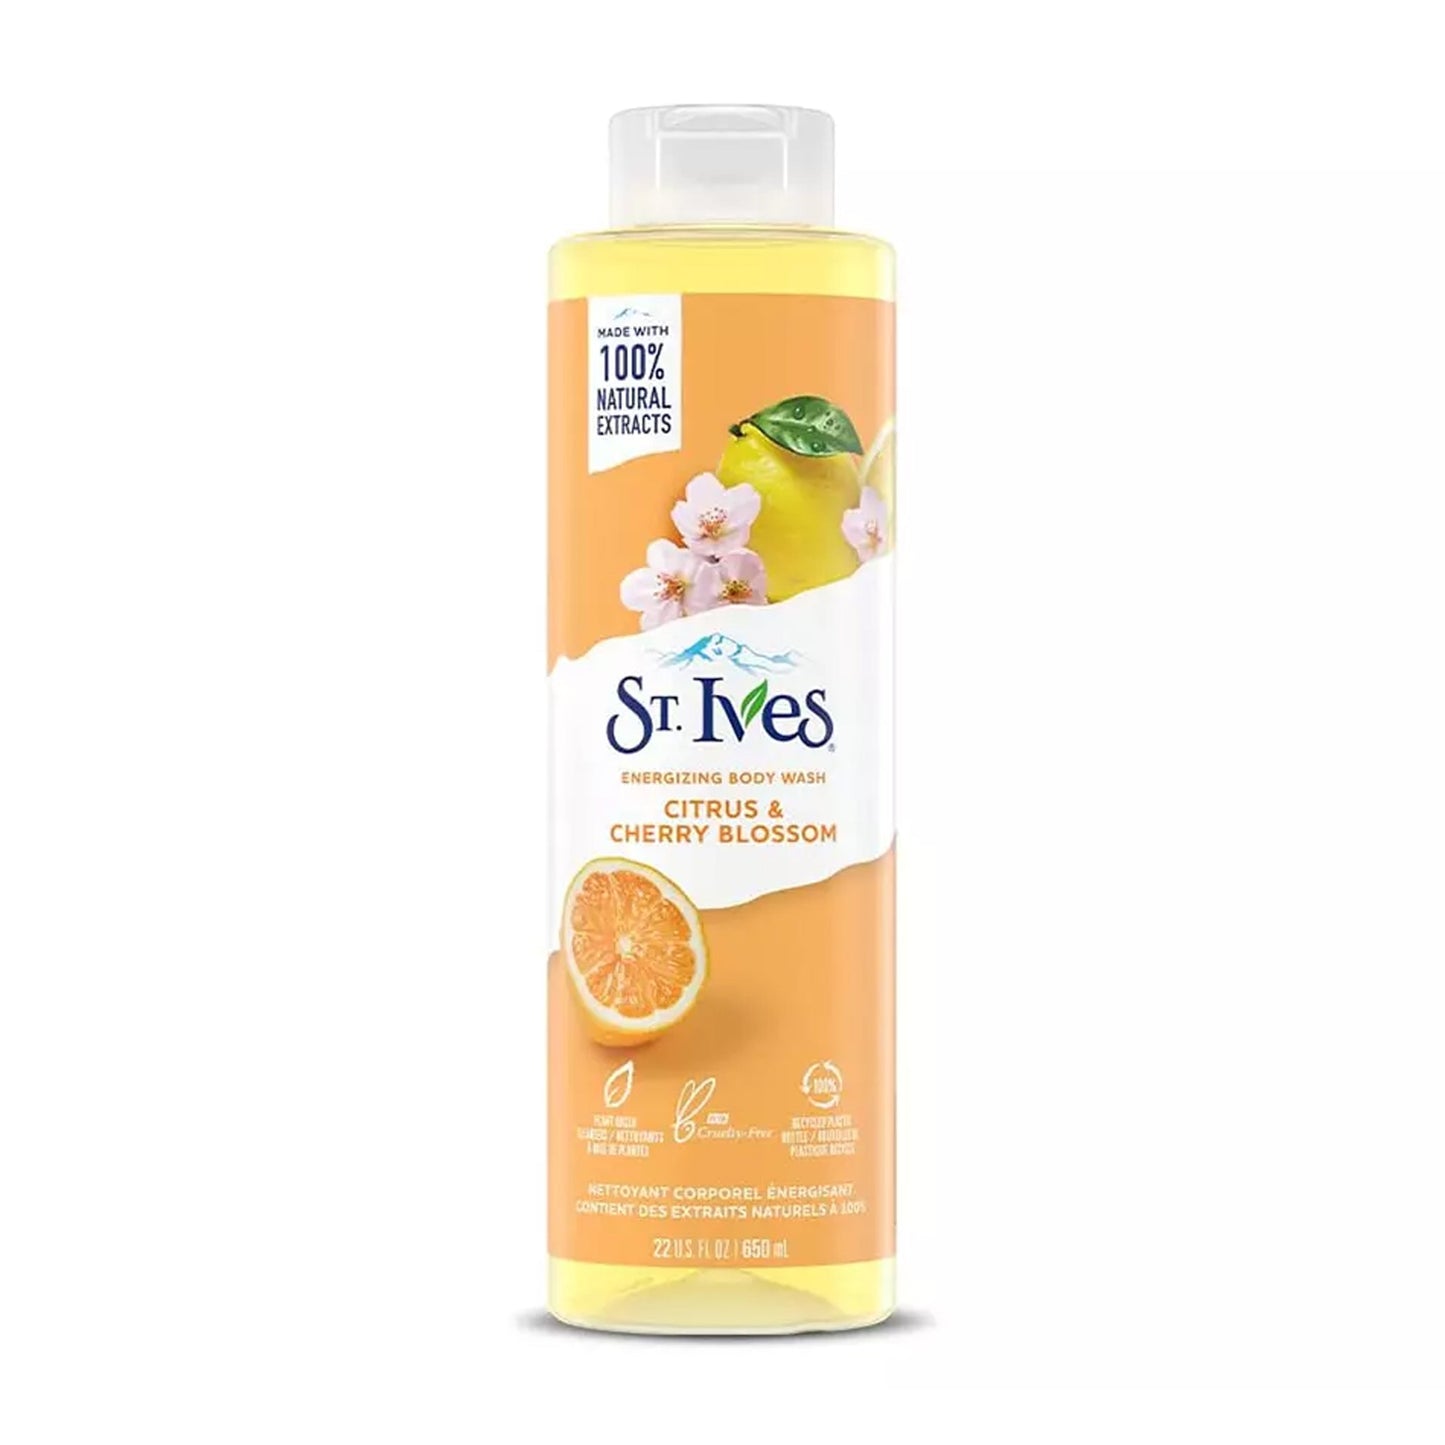 St. Ives - Citrus & Cherry Blossom Energizing Body Wash - 650ml